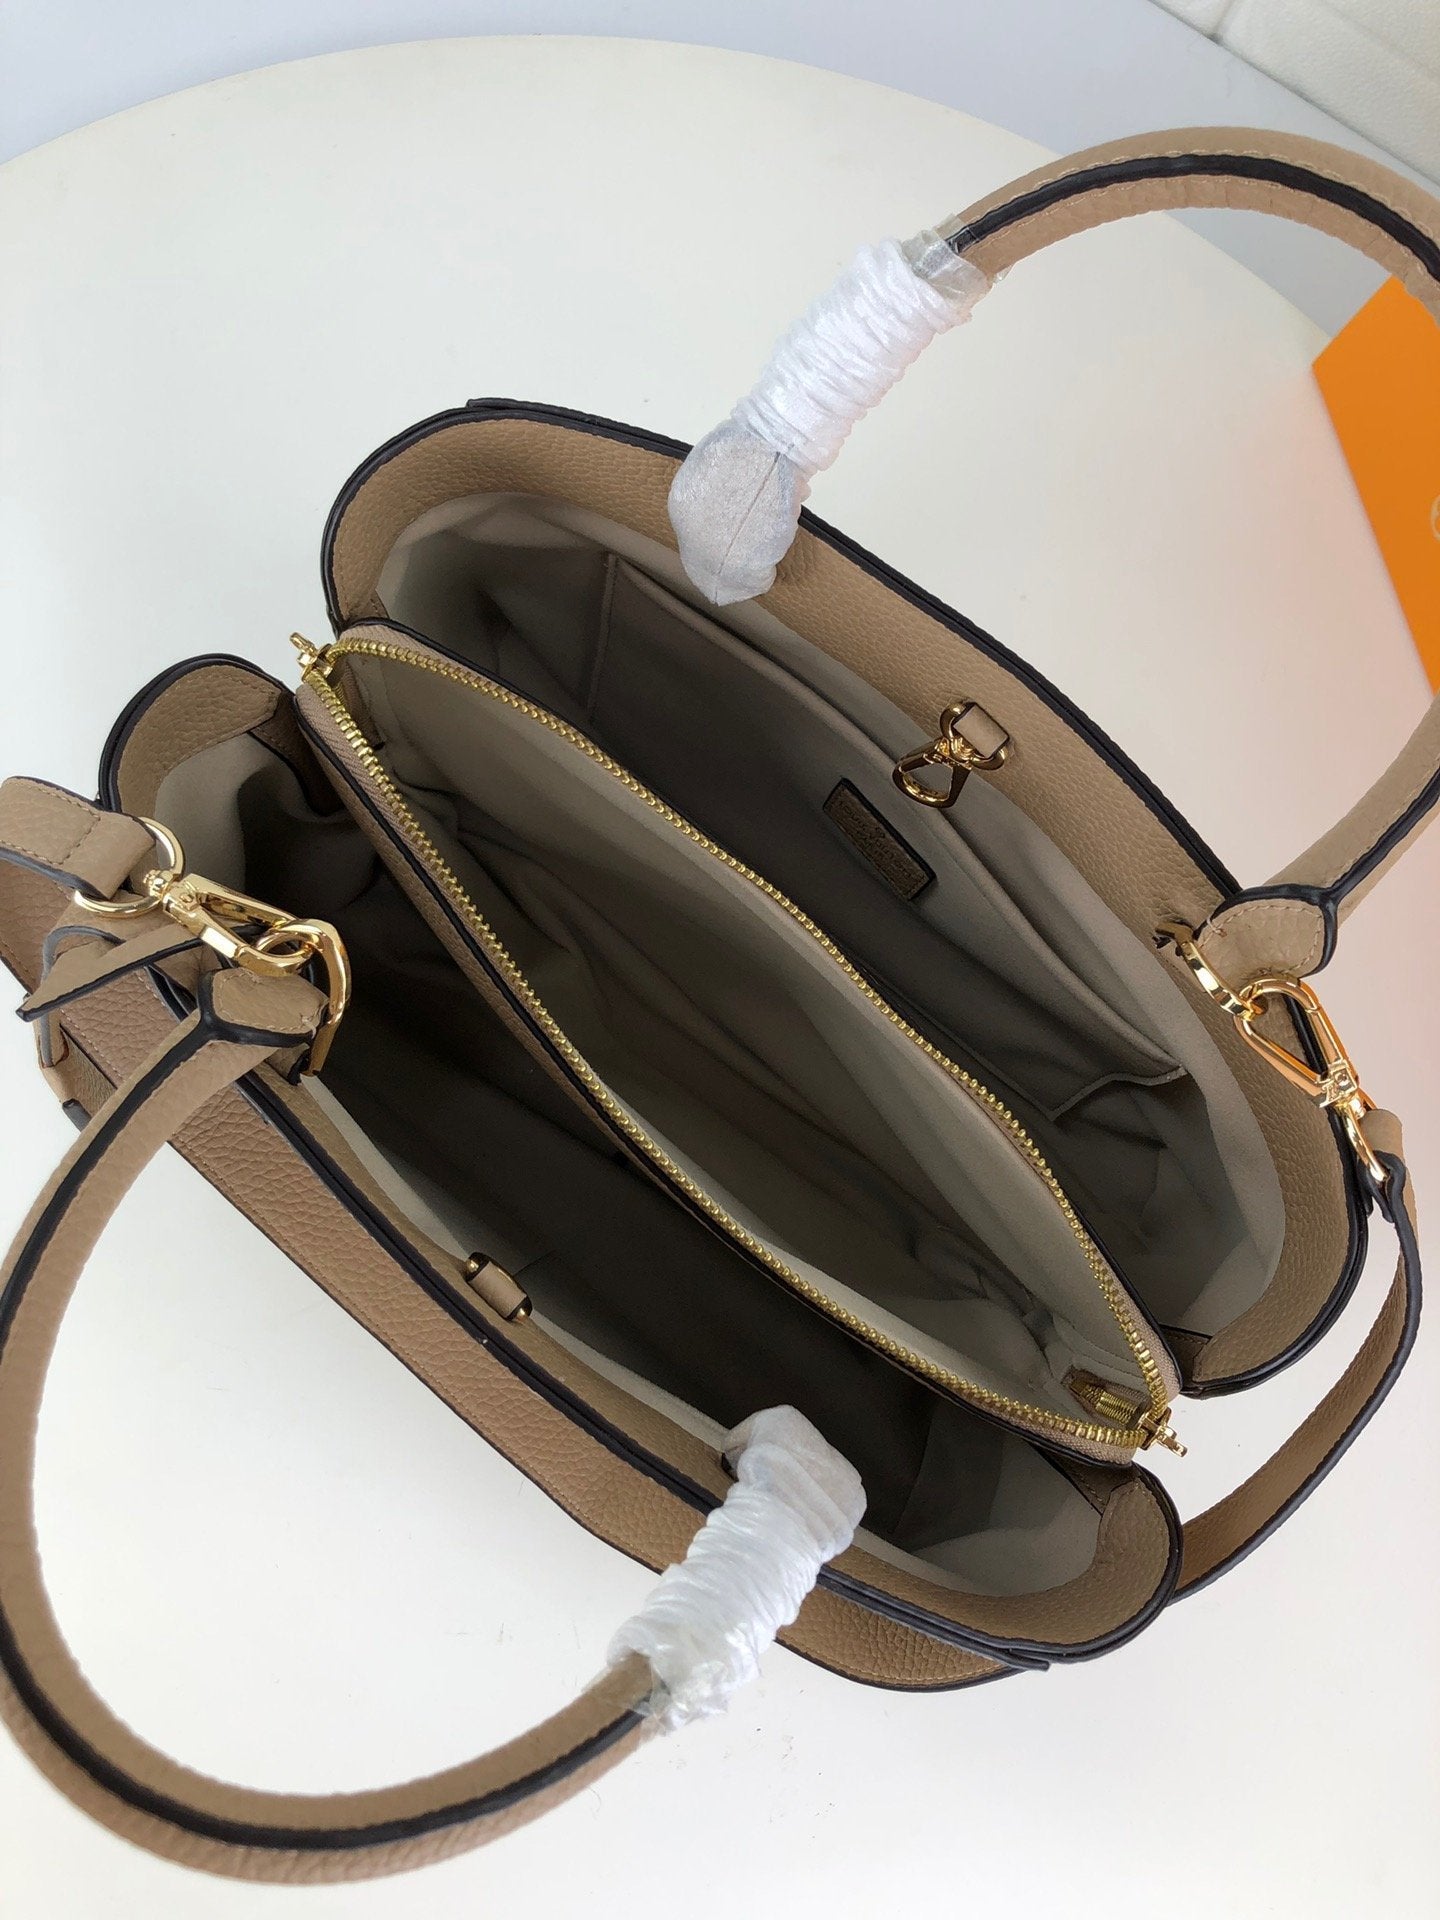 EI - Top Handbags LUV 035